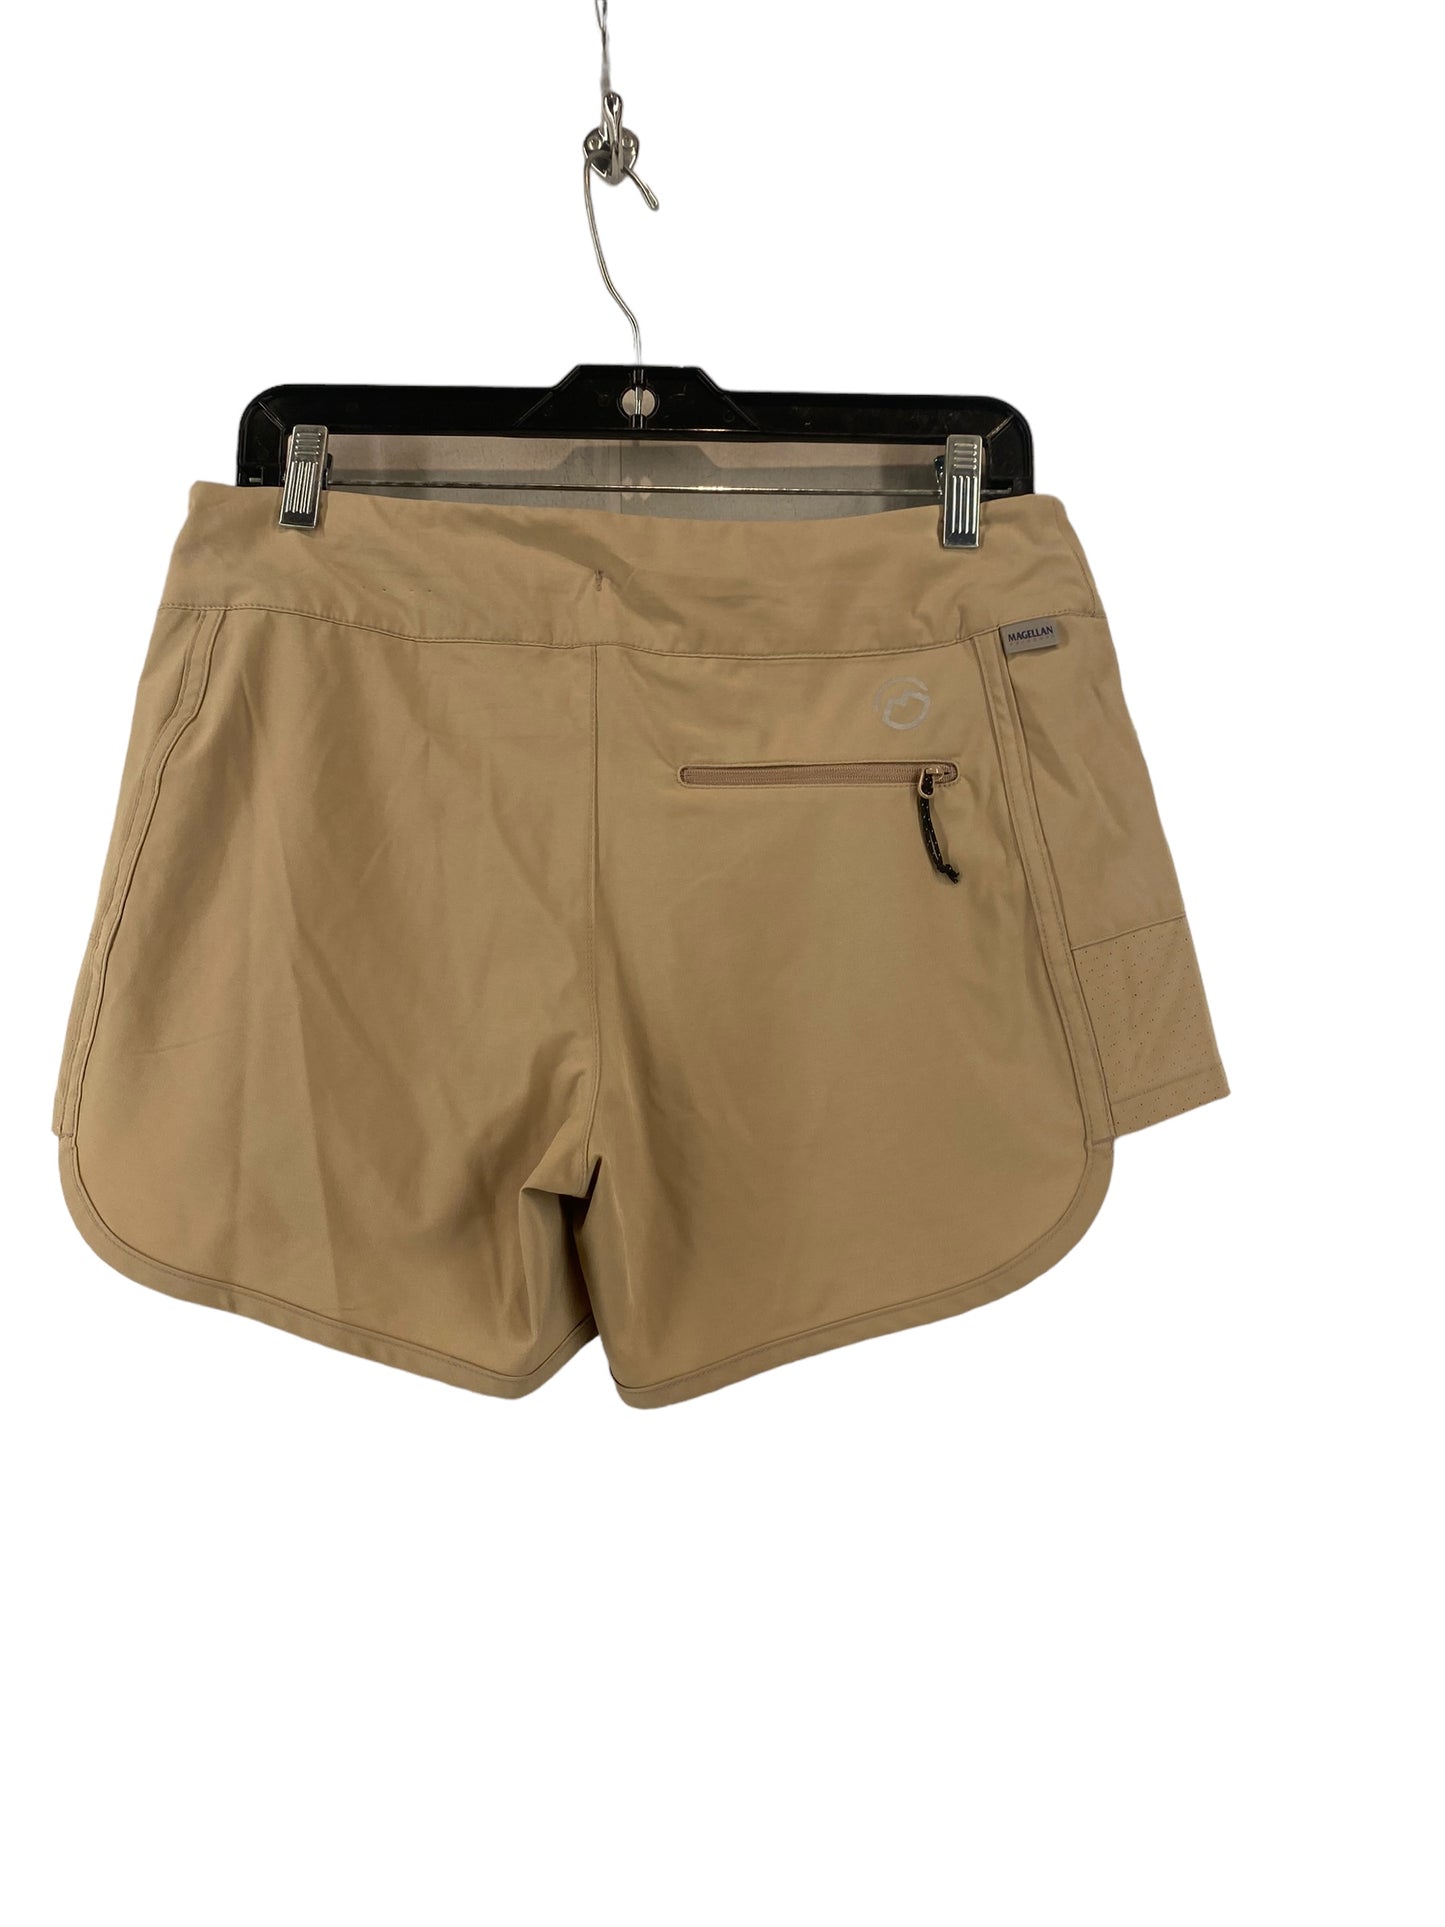 Shorts By Magellan  Size: M